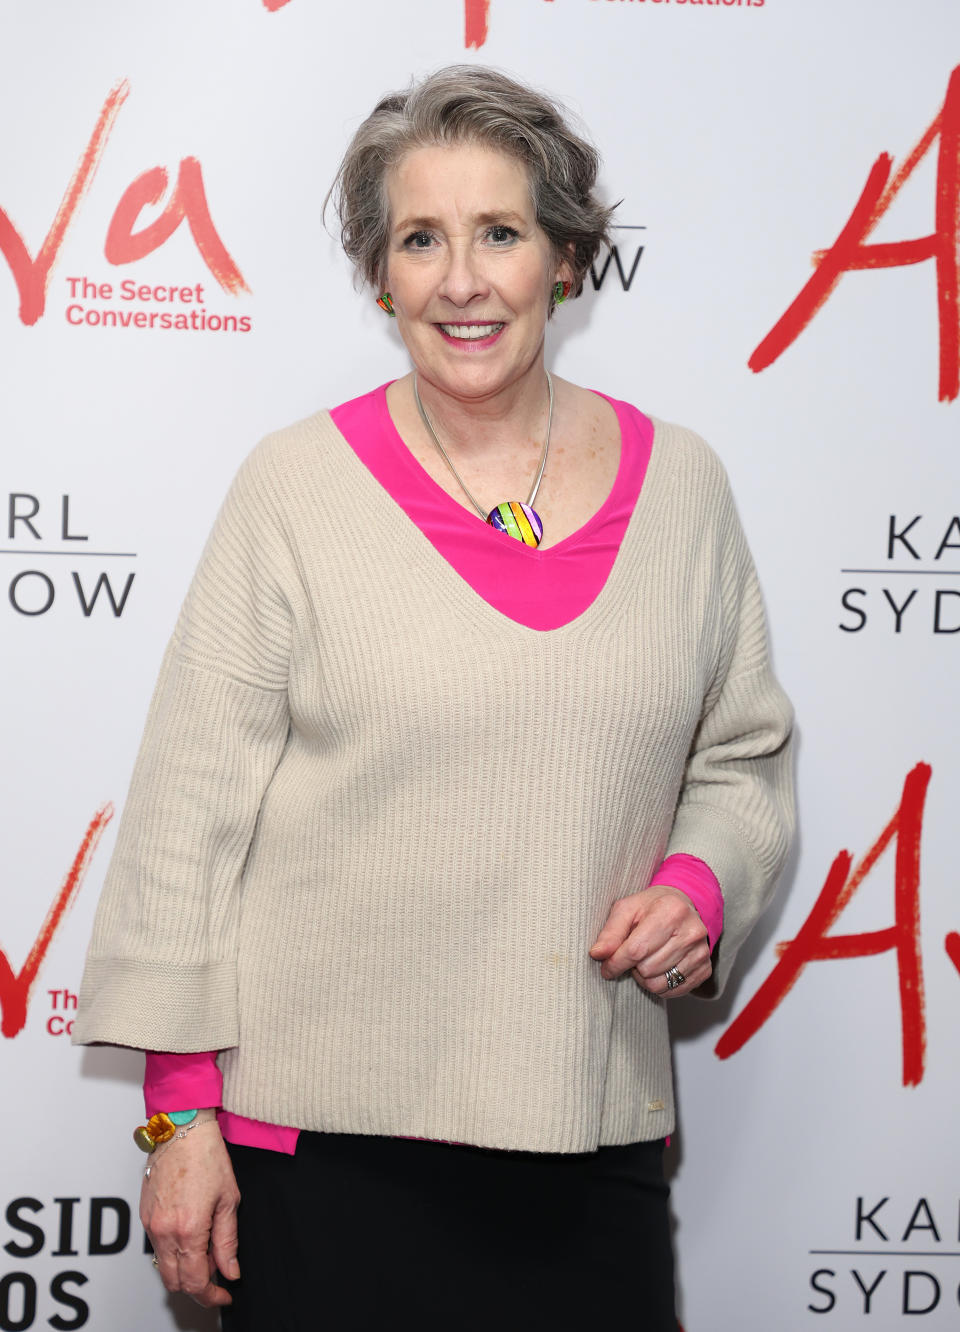 Phyllis Logan attends "Ava: The Secret Conversations" Press Night at Riverside Studio